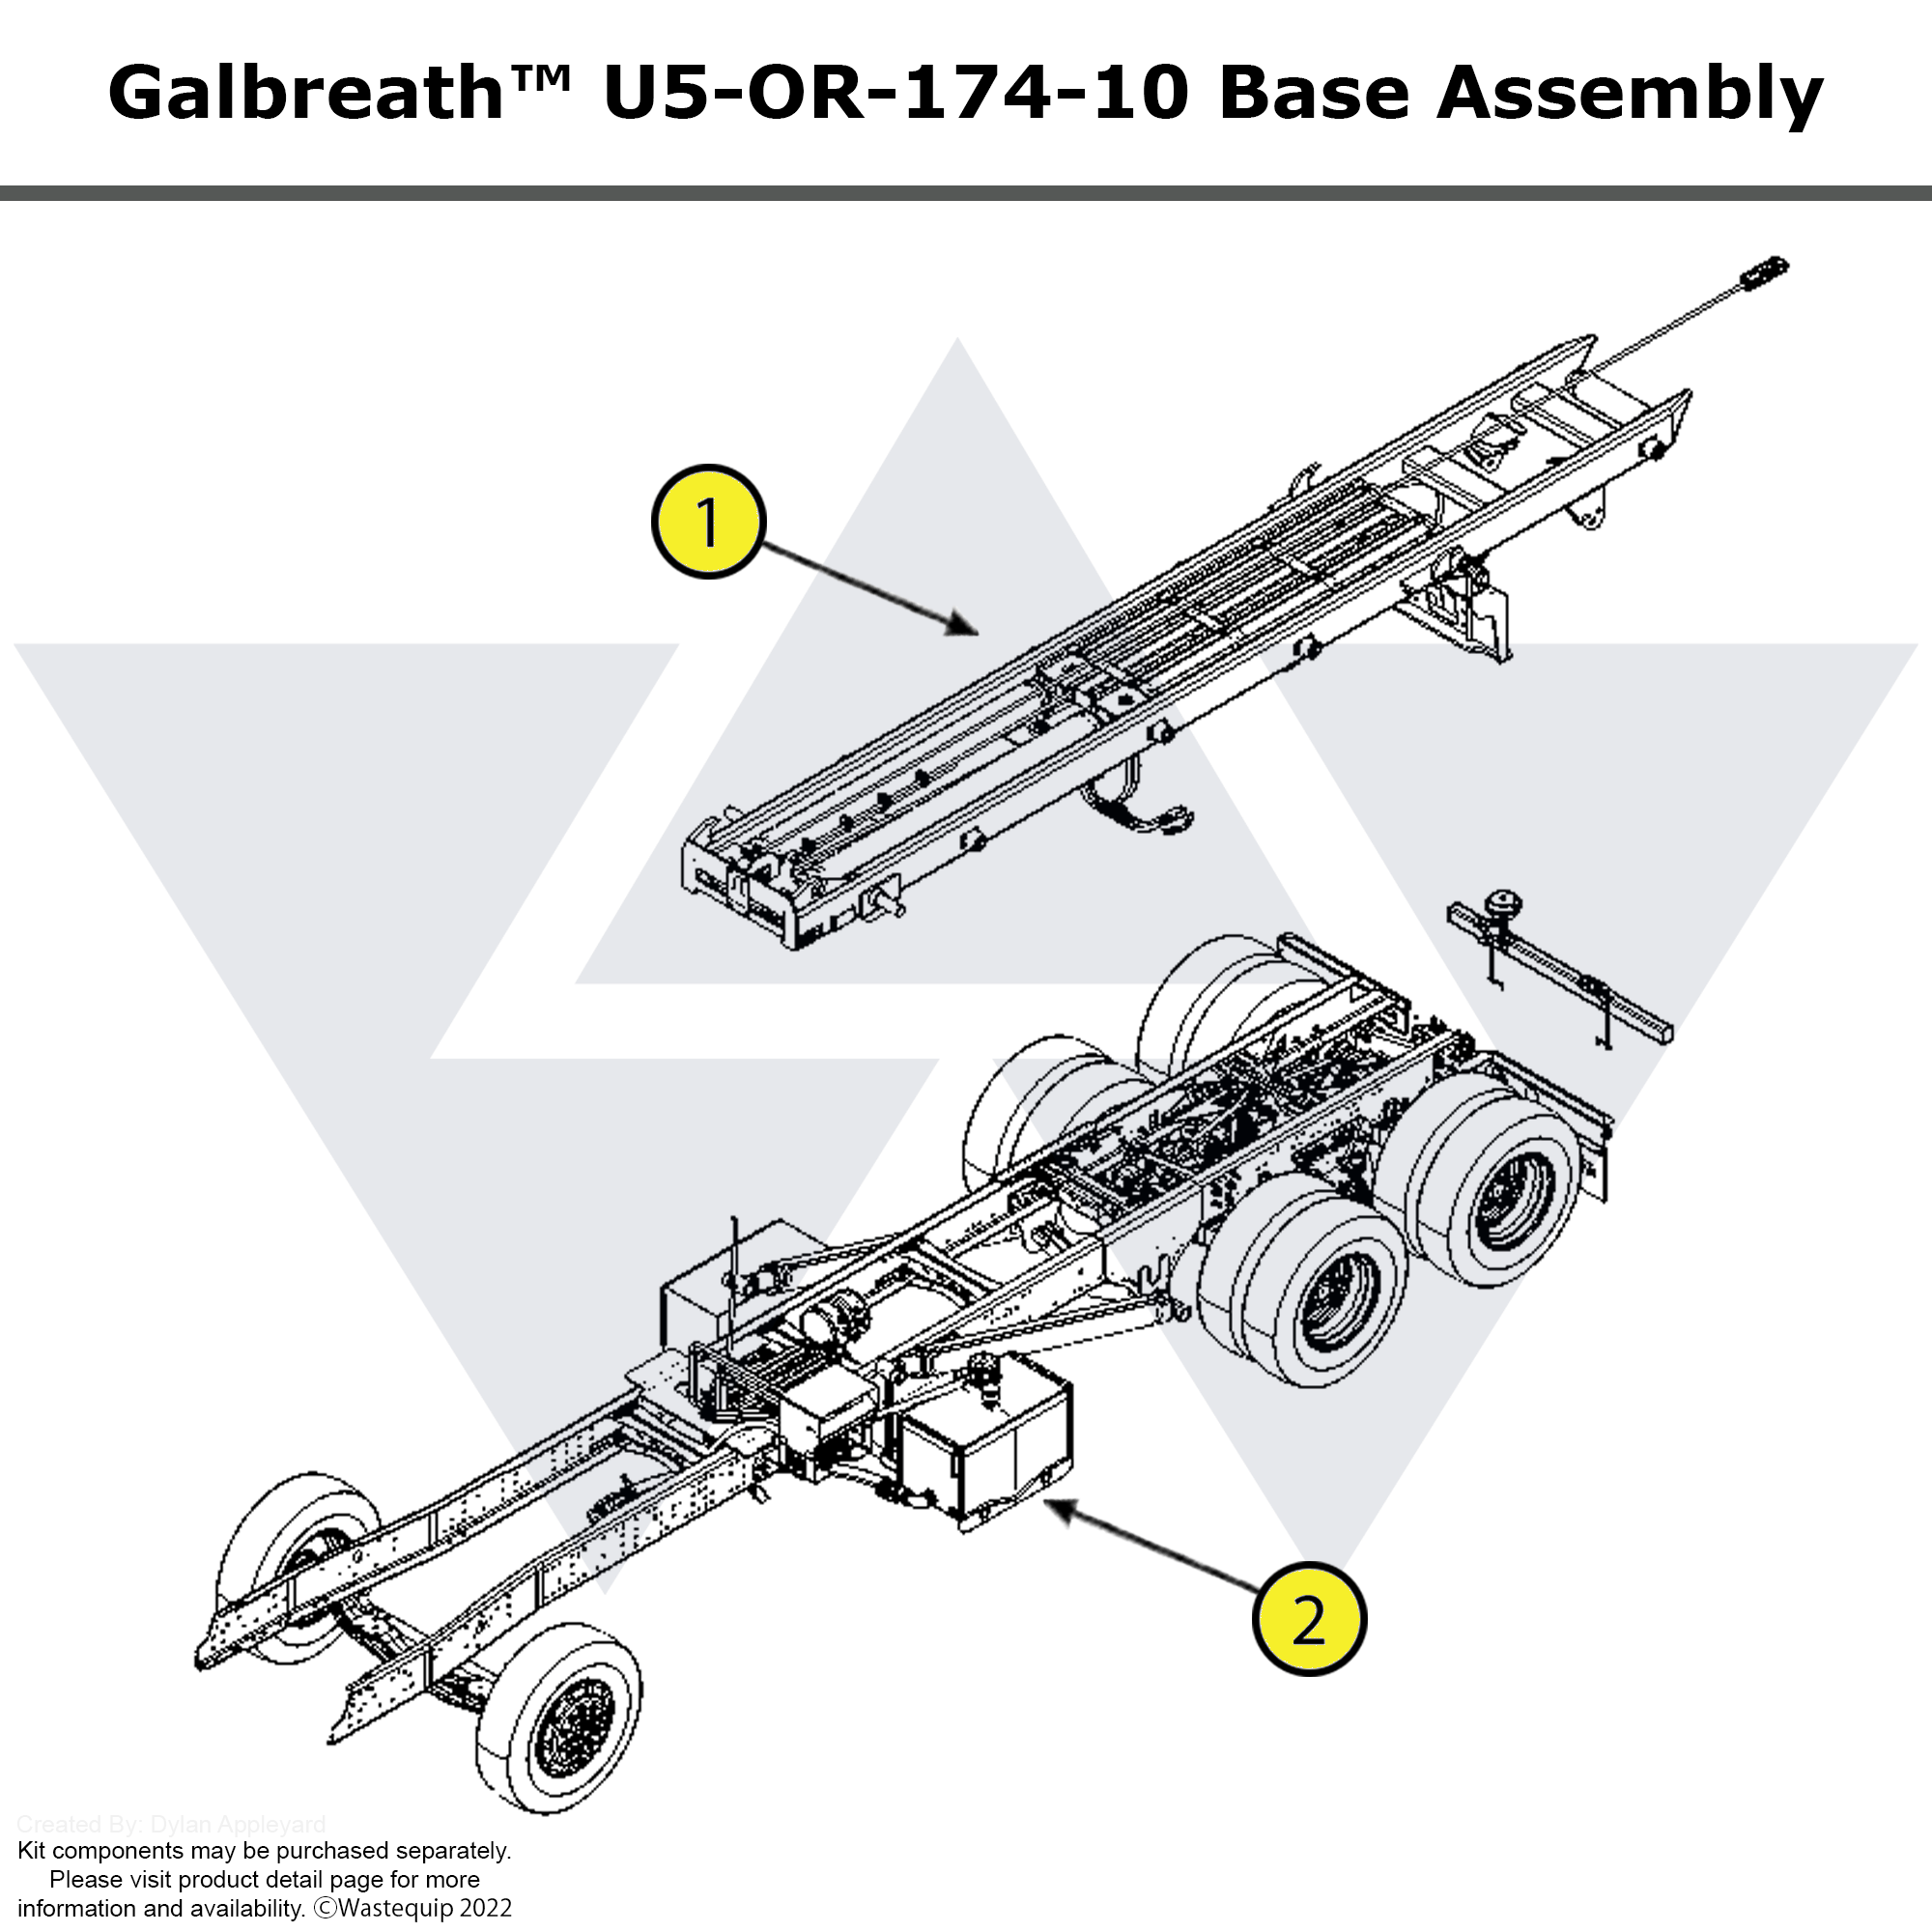 Galbreath™ Hoist U5-OR-174-10 Assembly